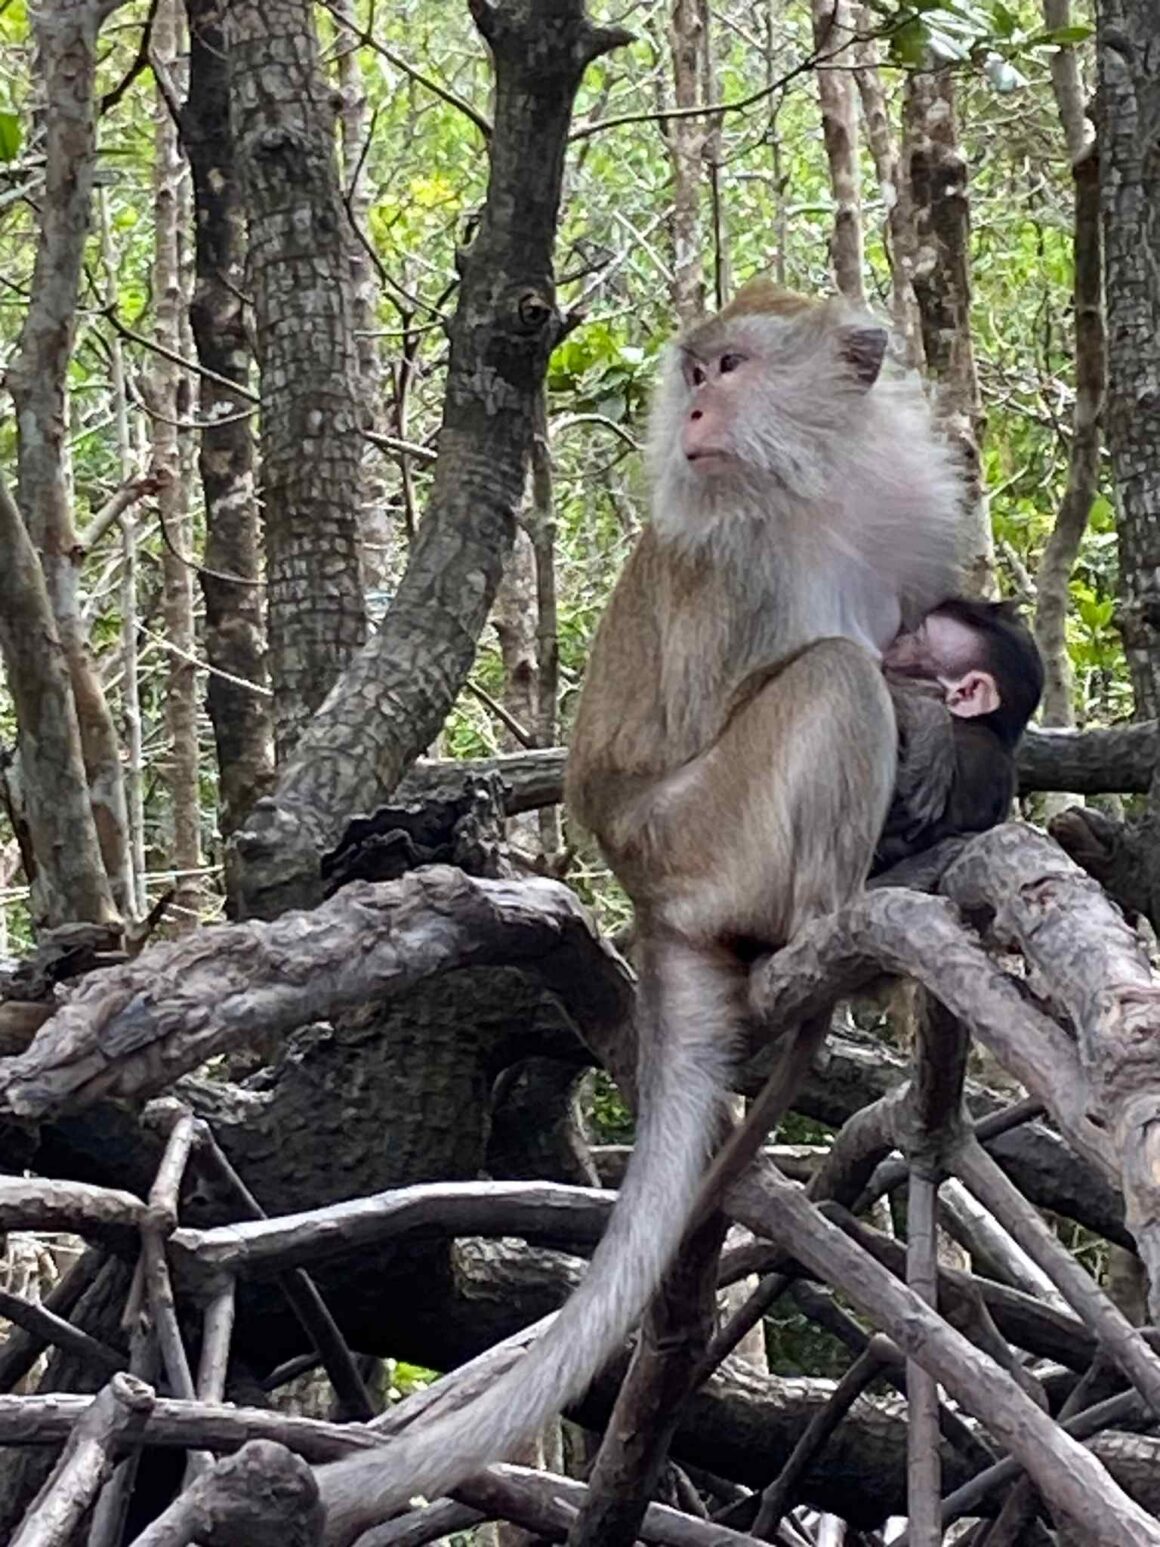 A photo of monkey holding his baby monkey